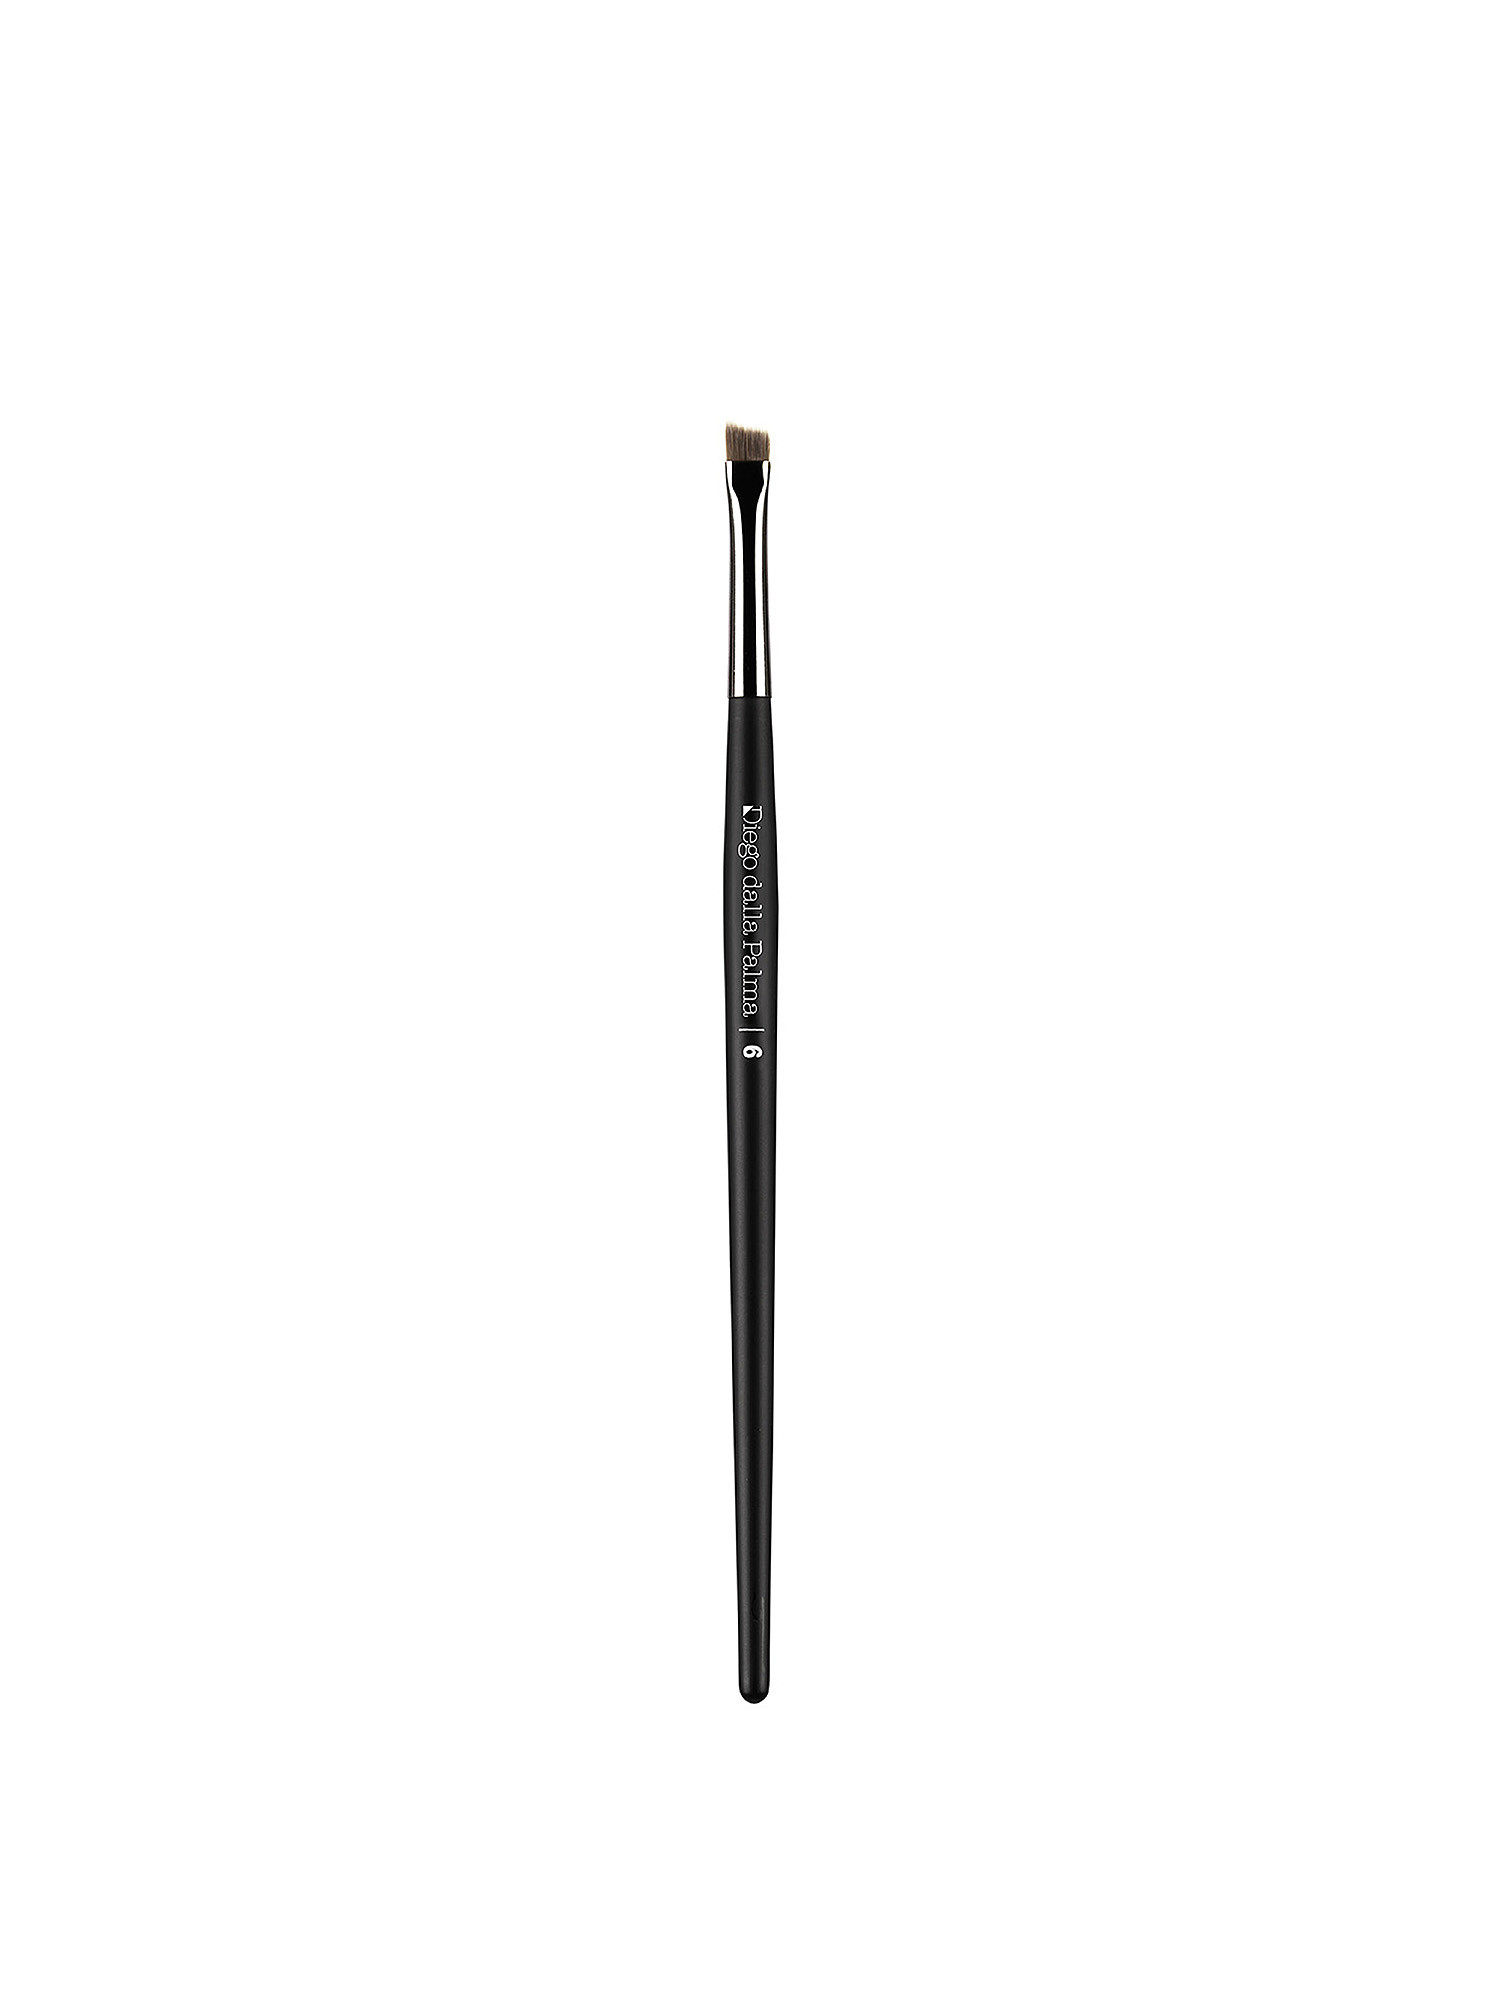 Eye and Eyebrow Pencil Brush N° 06, Black, large image number 0